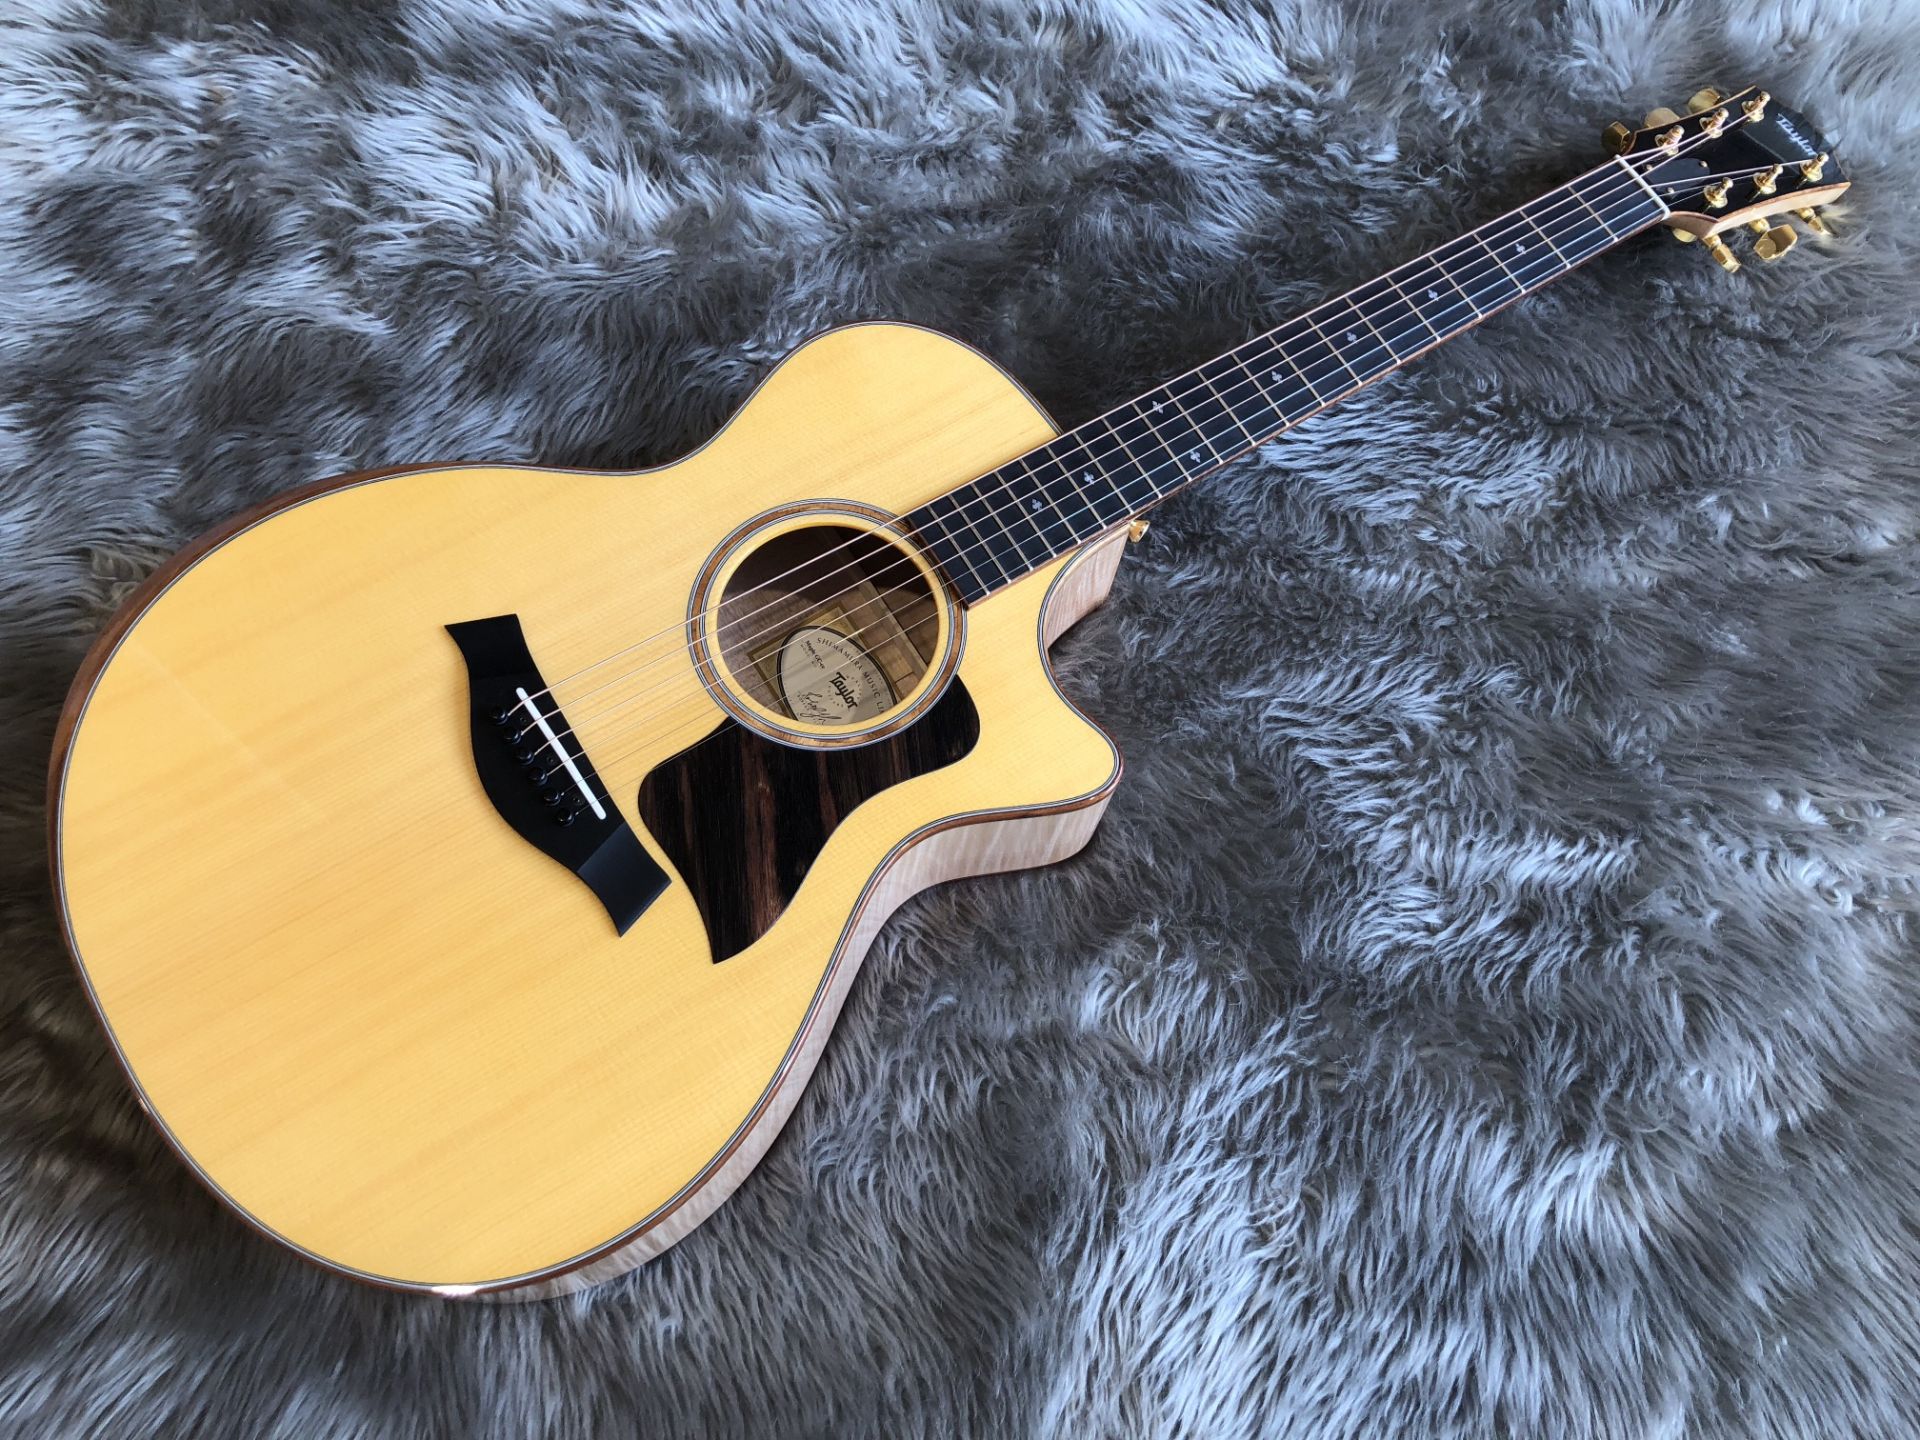 *GCce-Maple SP LTD 今回はスペシャルな木材と美しい装飾を兼ね備えた島村楽器限定モデルの紹介です。 |*ブランド|Taylor| |*型番|GCce-Maple SP LTD| |*販売価格|[!￥547,800(税込)!]| |*ボディタイプ|エレアコギター| |*カラー|NATU […]